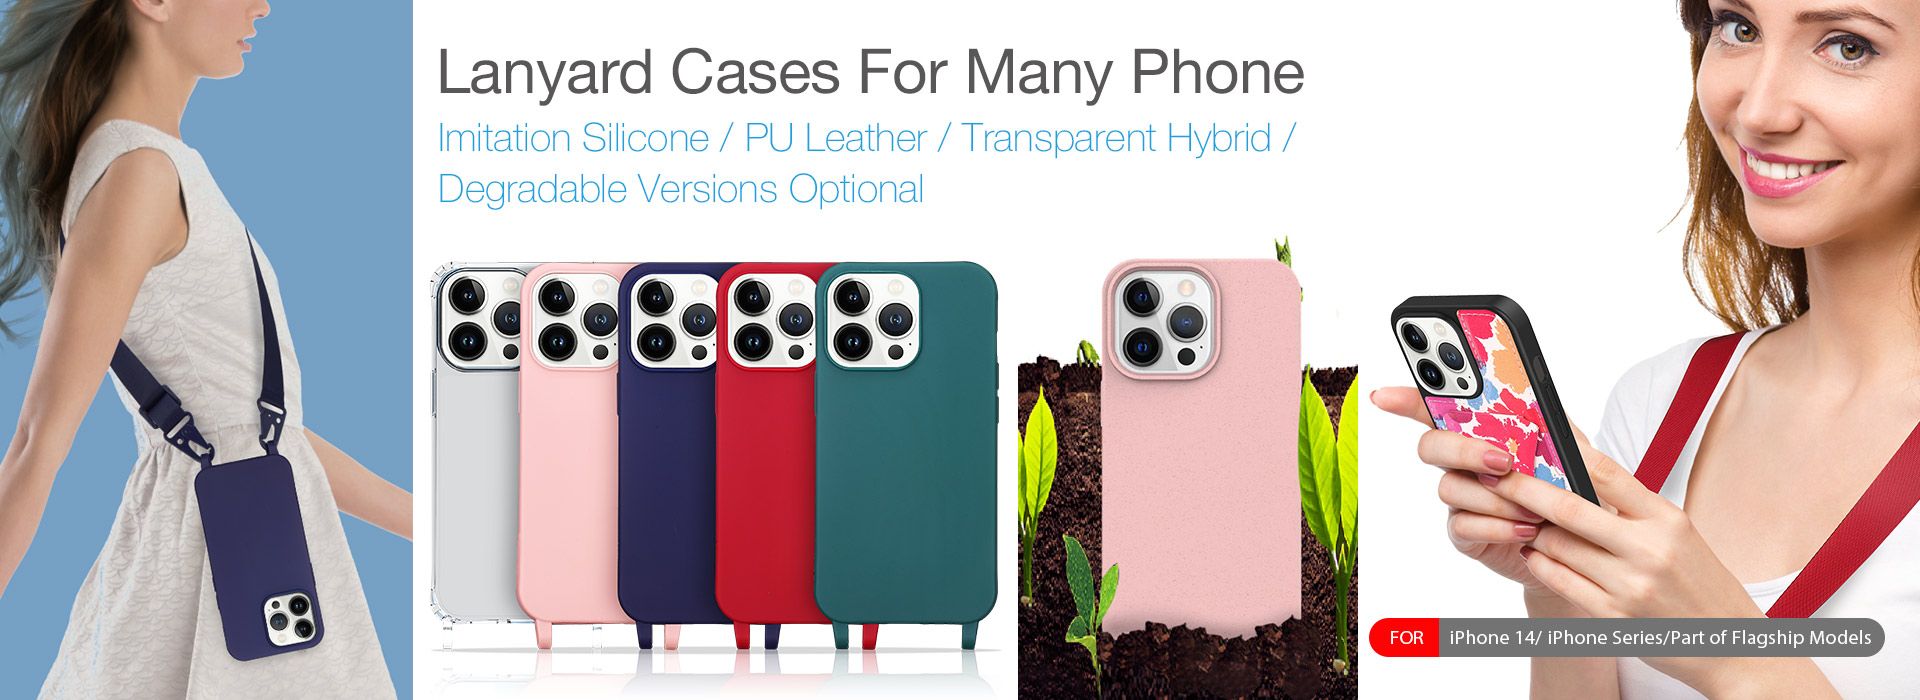 Lanyard Case--PU Leather+Kickstand Version((Red Carbon Fiber)